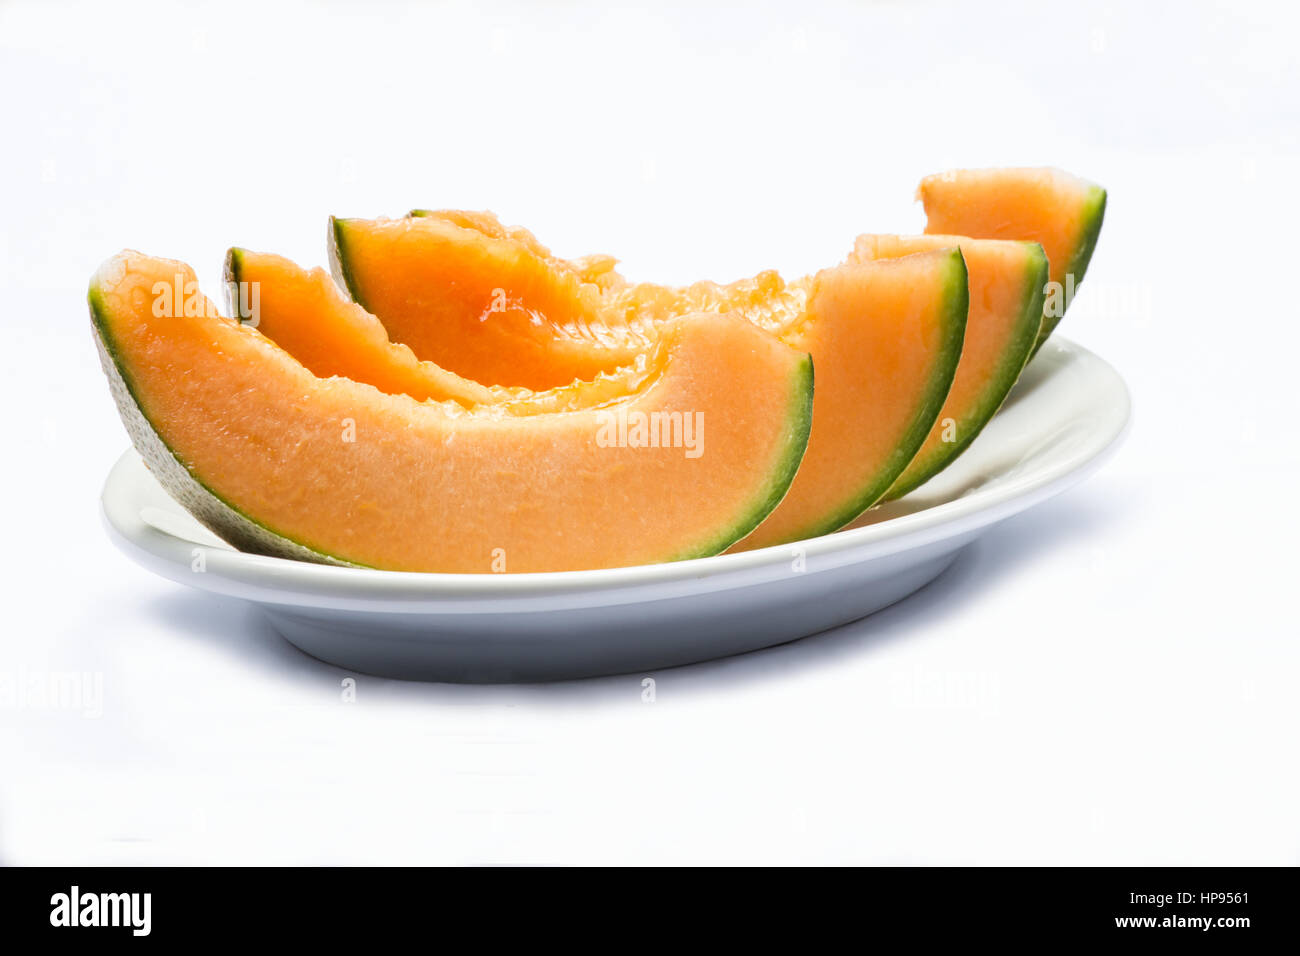 Melon slices on white background Stock Photo